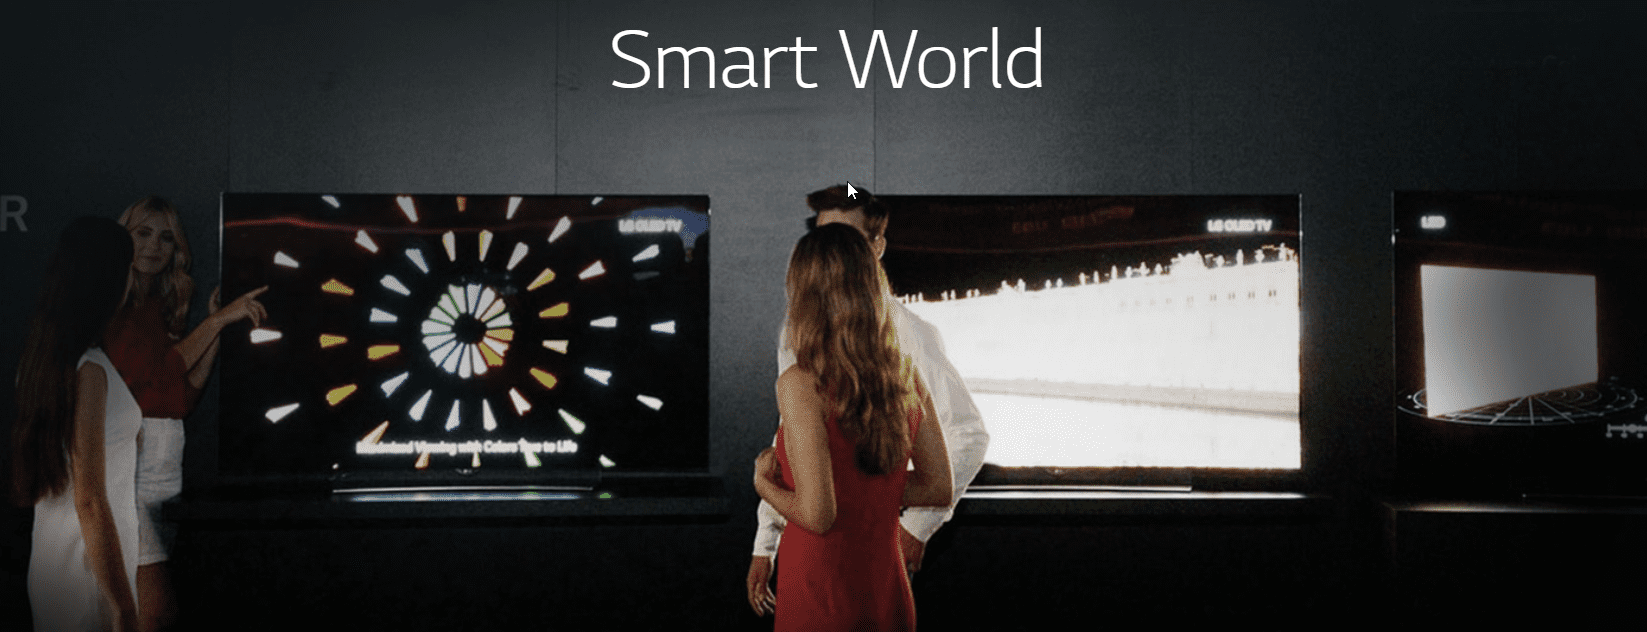 LG Smart World